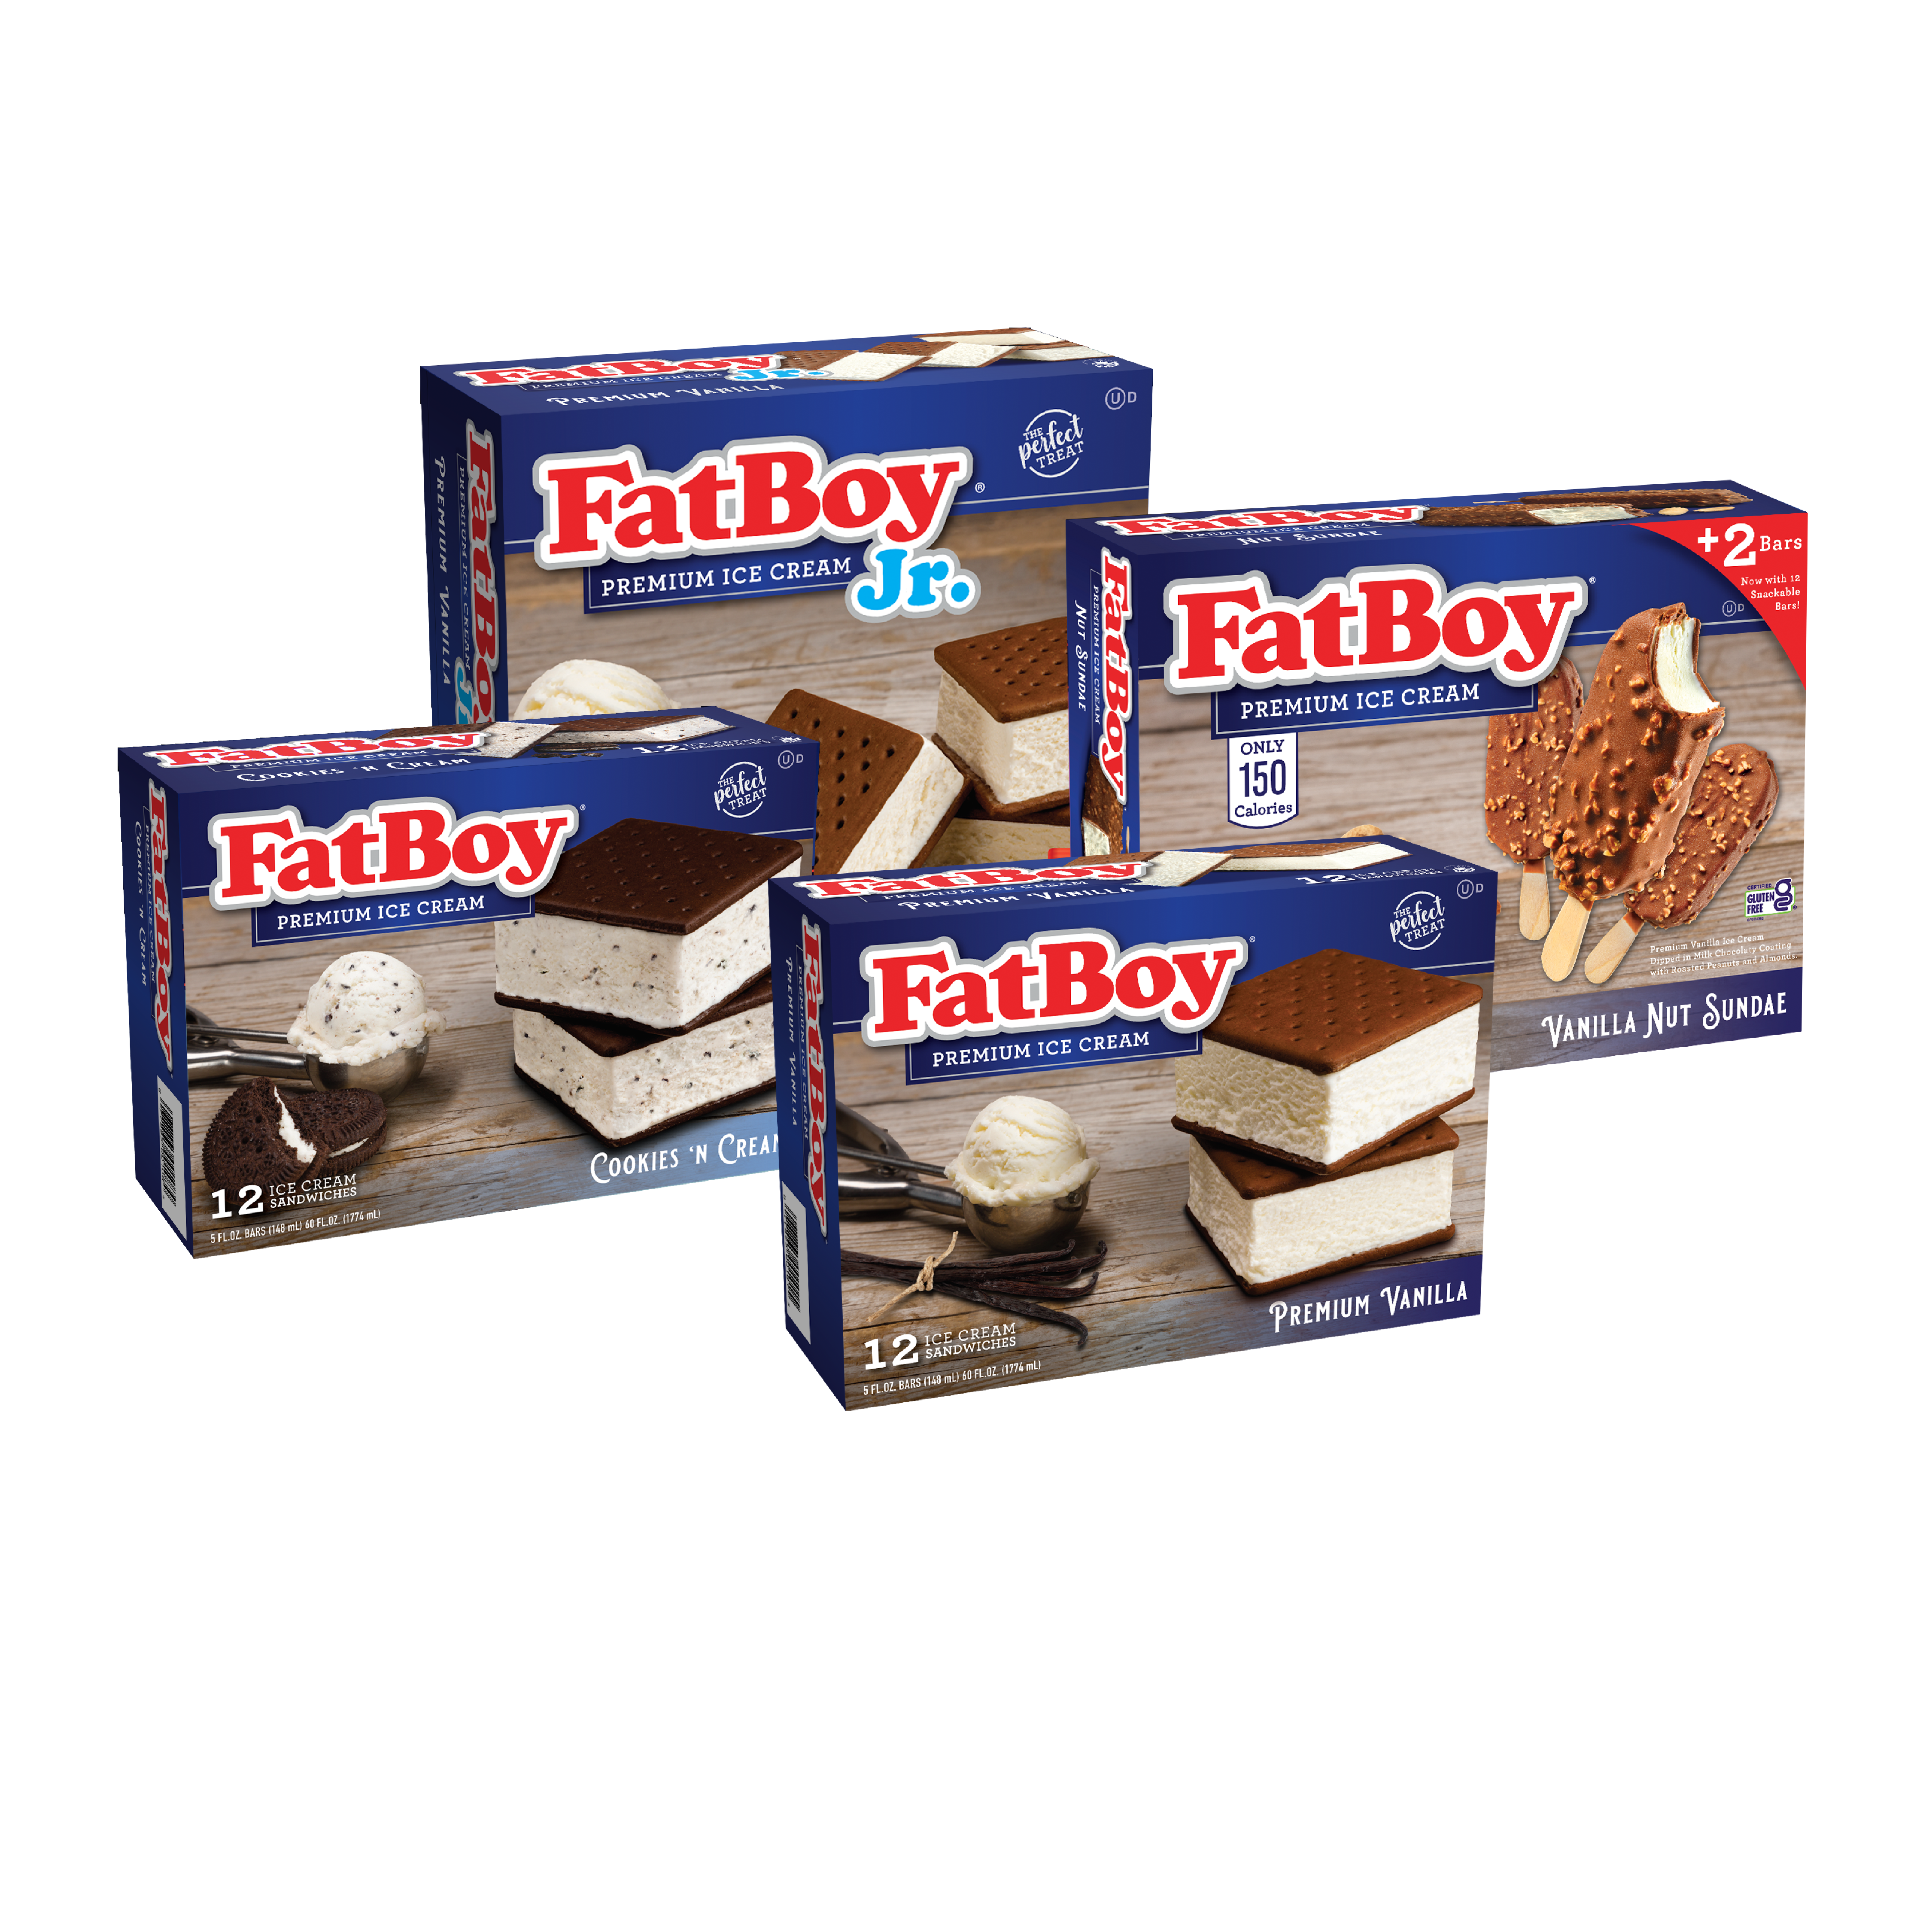 Fat Boy Product Line-Up: Cookies 'n Cream Ice Cream Sandwiches, Premium Vanilla Sandwiches, Jr. Sandwiches and Vanilla Nut Sundae Bar.